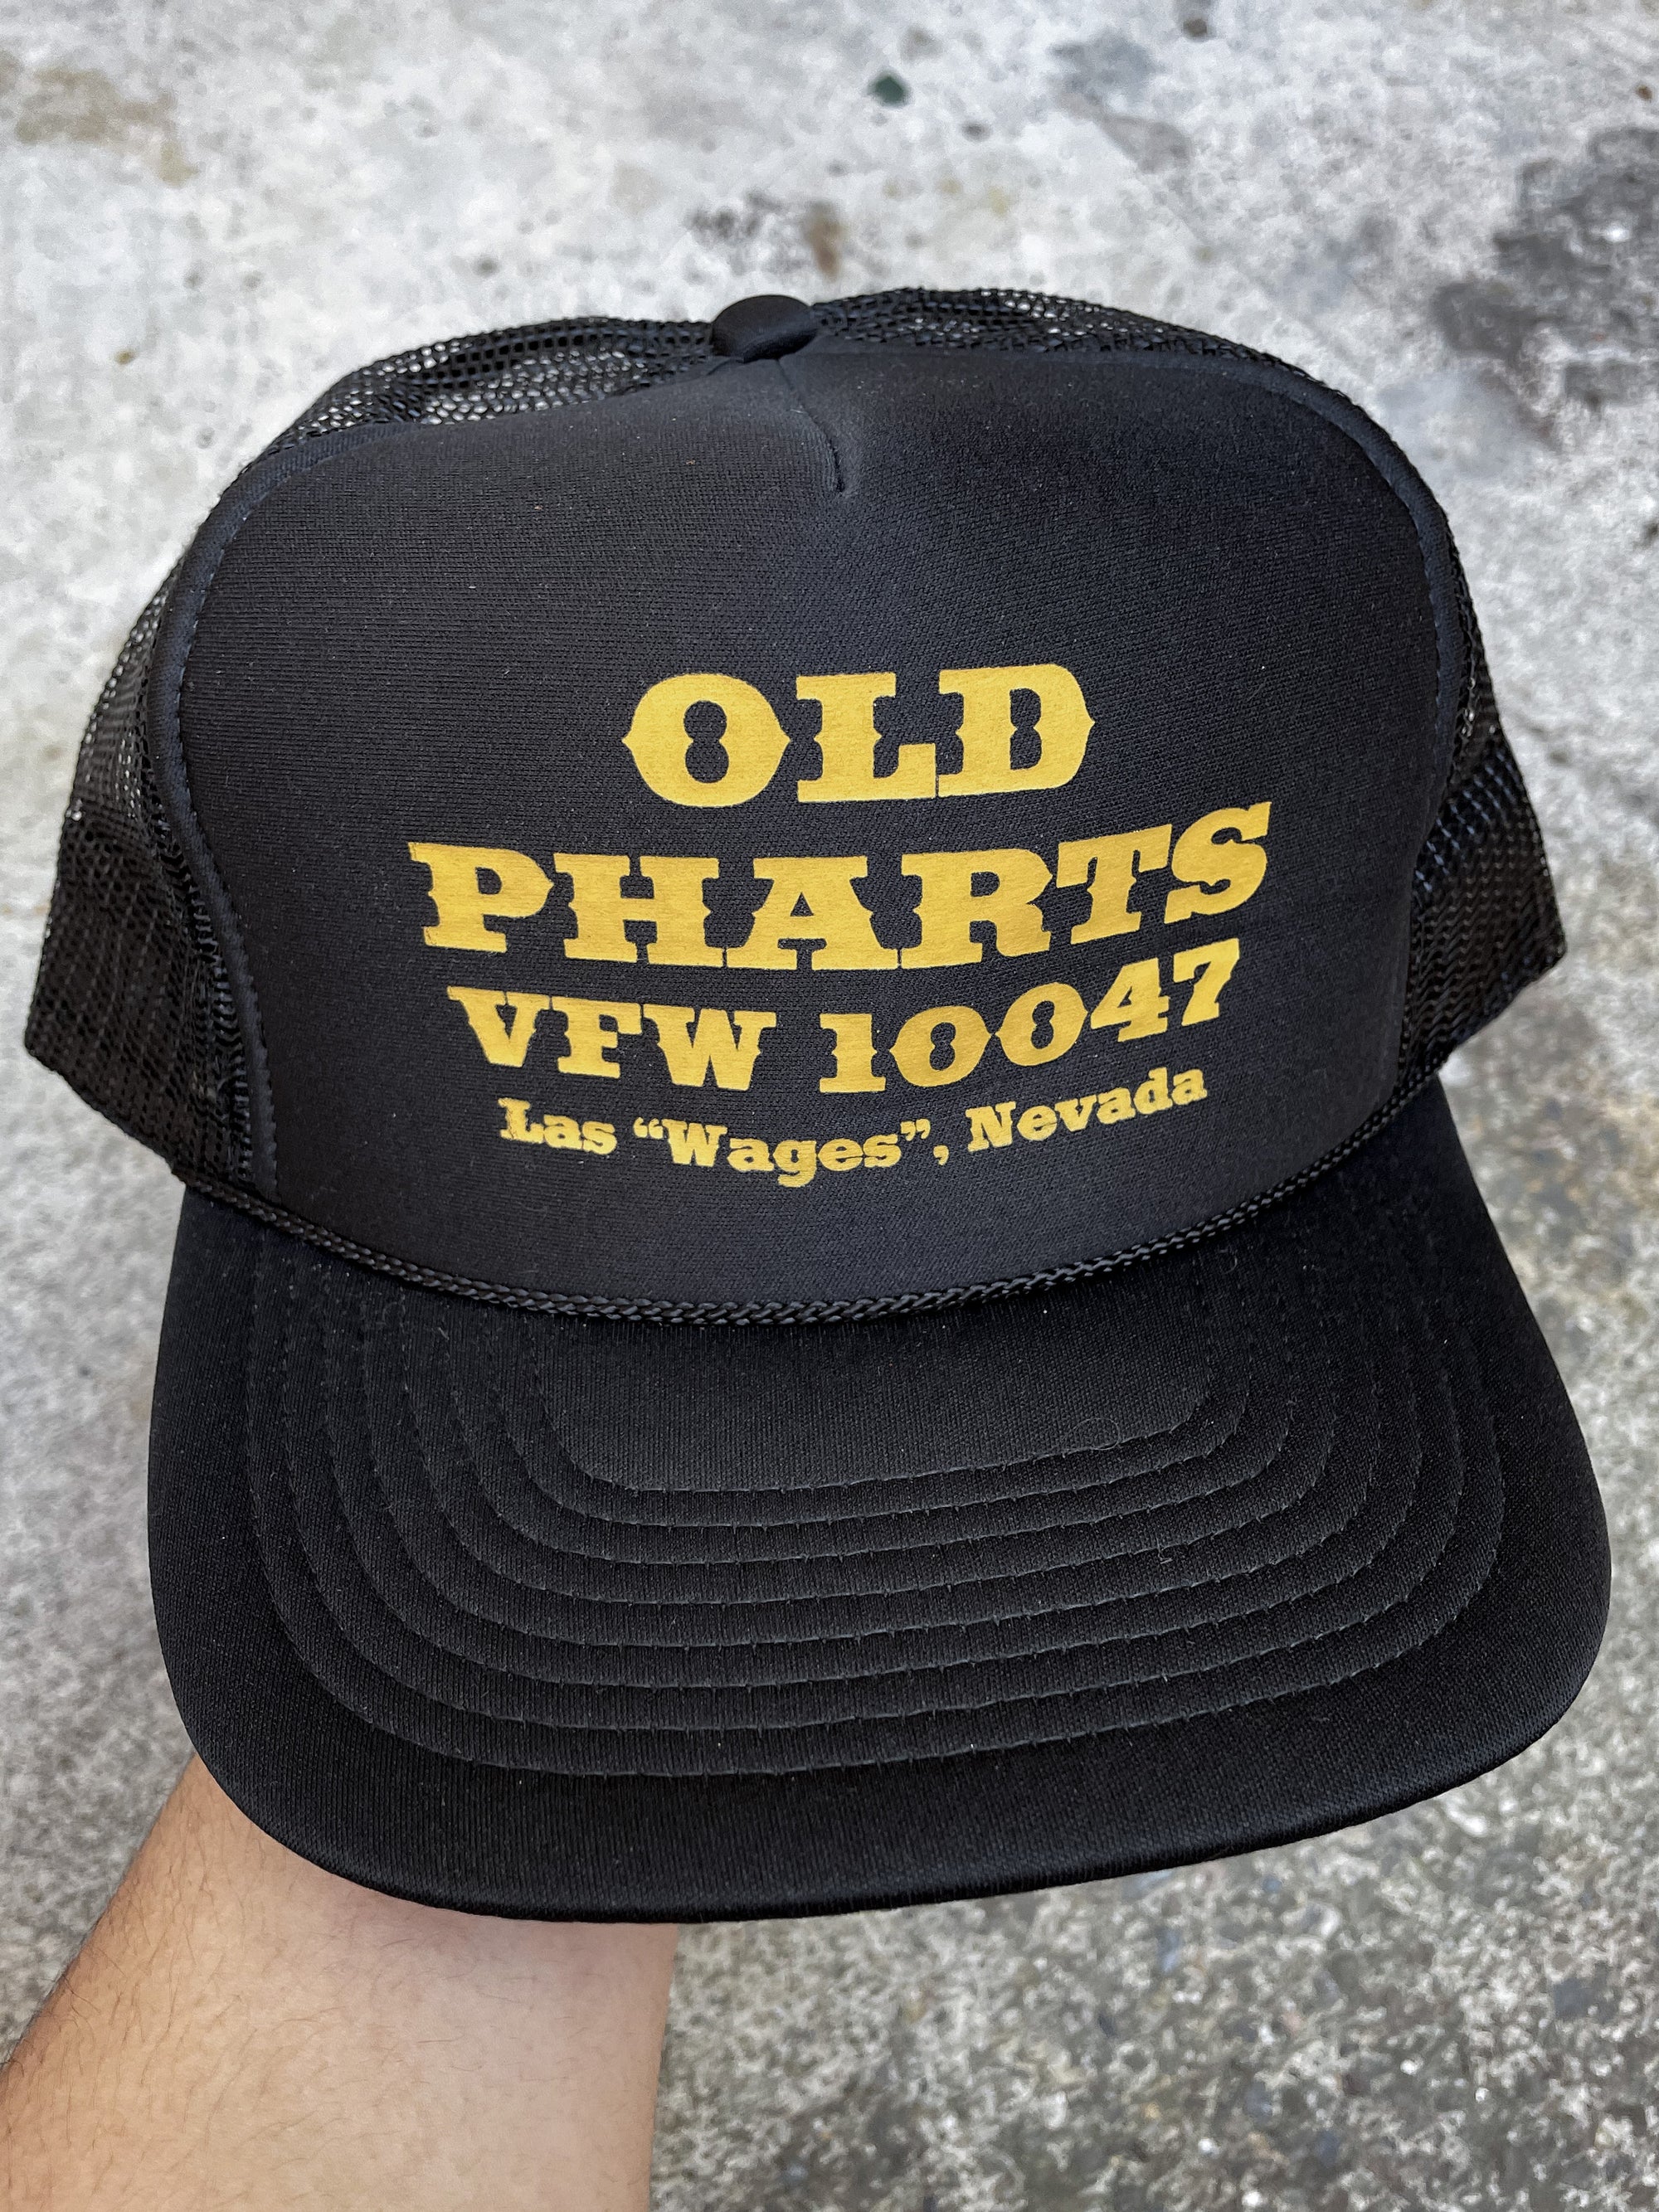 1990s “Old Pharts” Trucker Hat